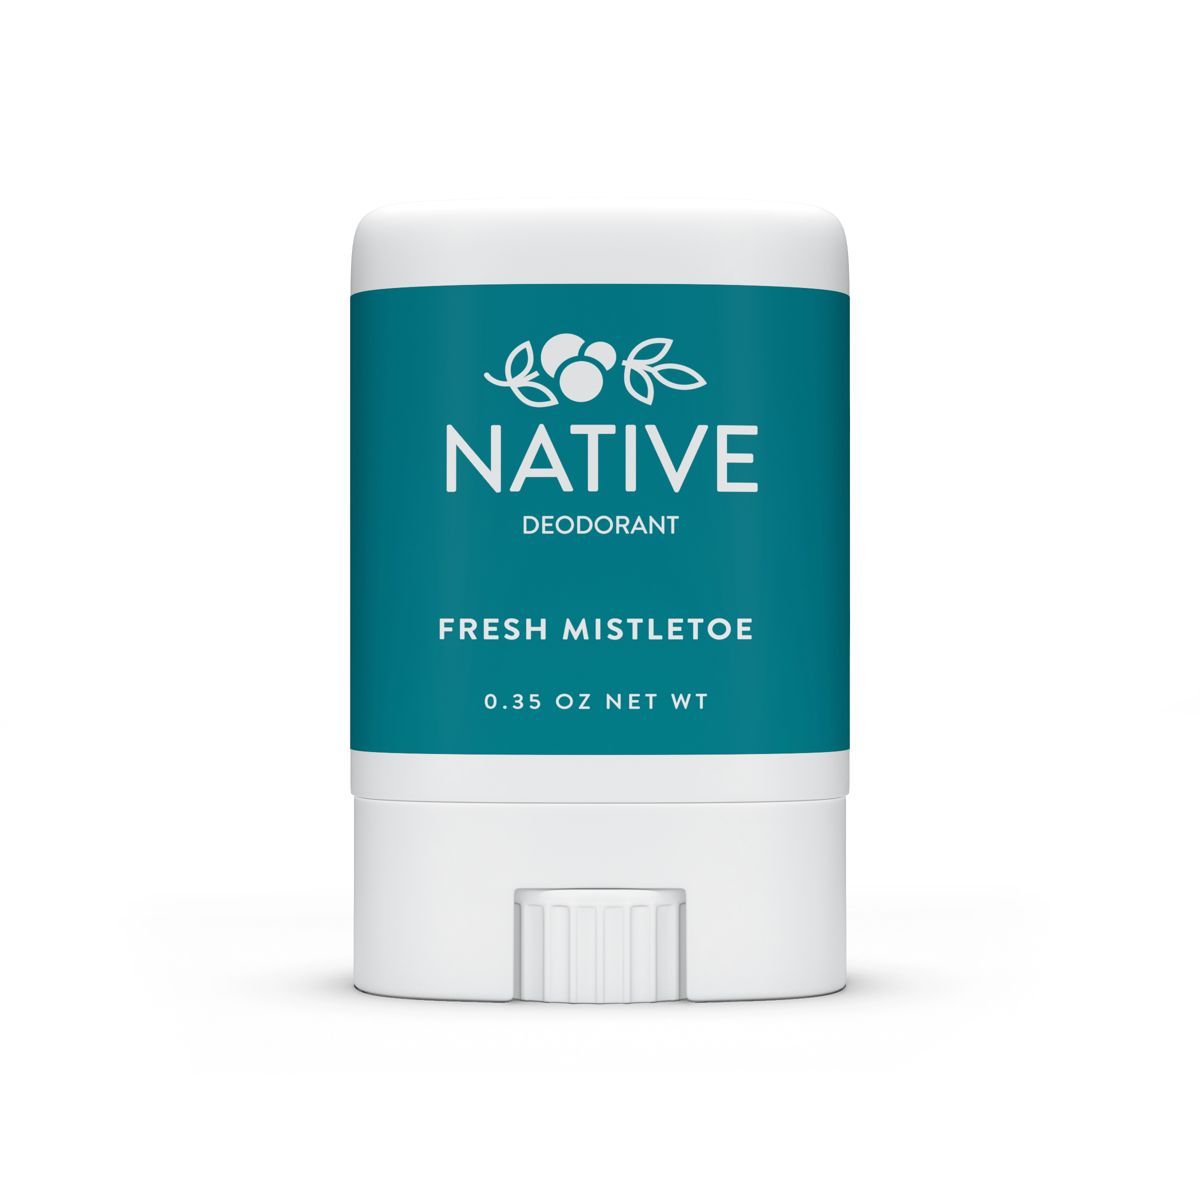 Native Deodorant - Limited Edition Holiday - Fresh Mistletoe - Aluminum Free - Trial Size 0.35 oz | Target